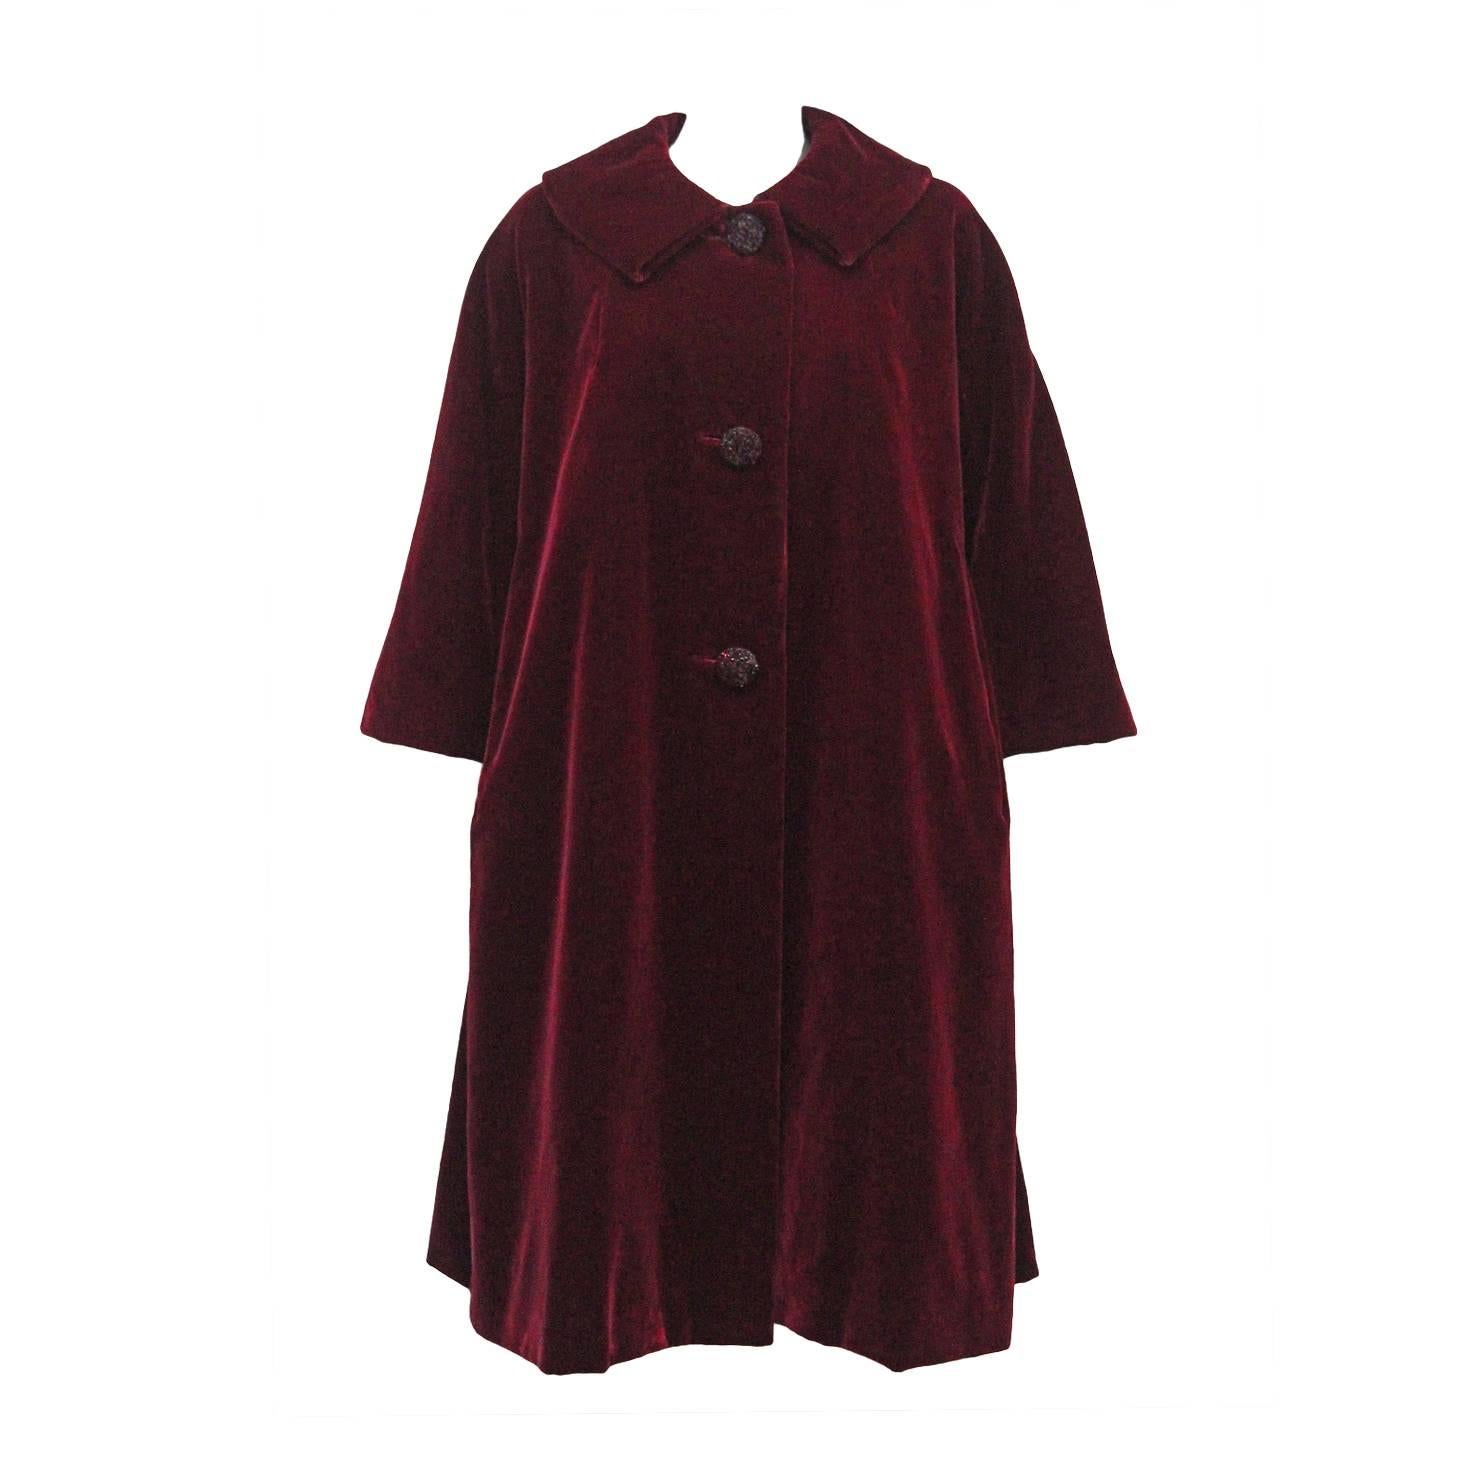 Christian Dior Haute Couture silk velvet opera coat, Autumn/Winter 1956